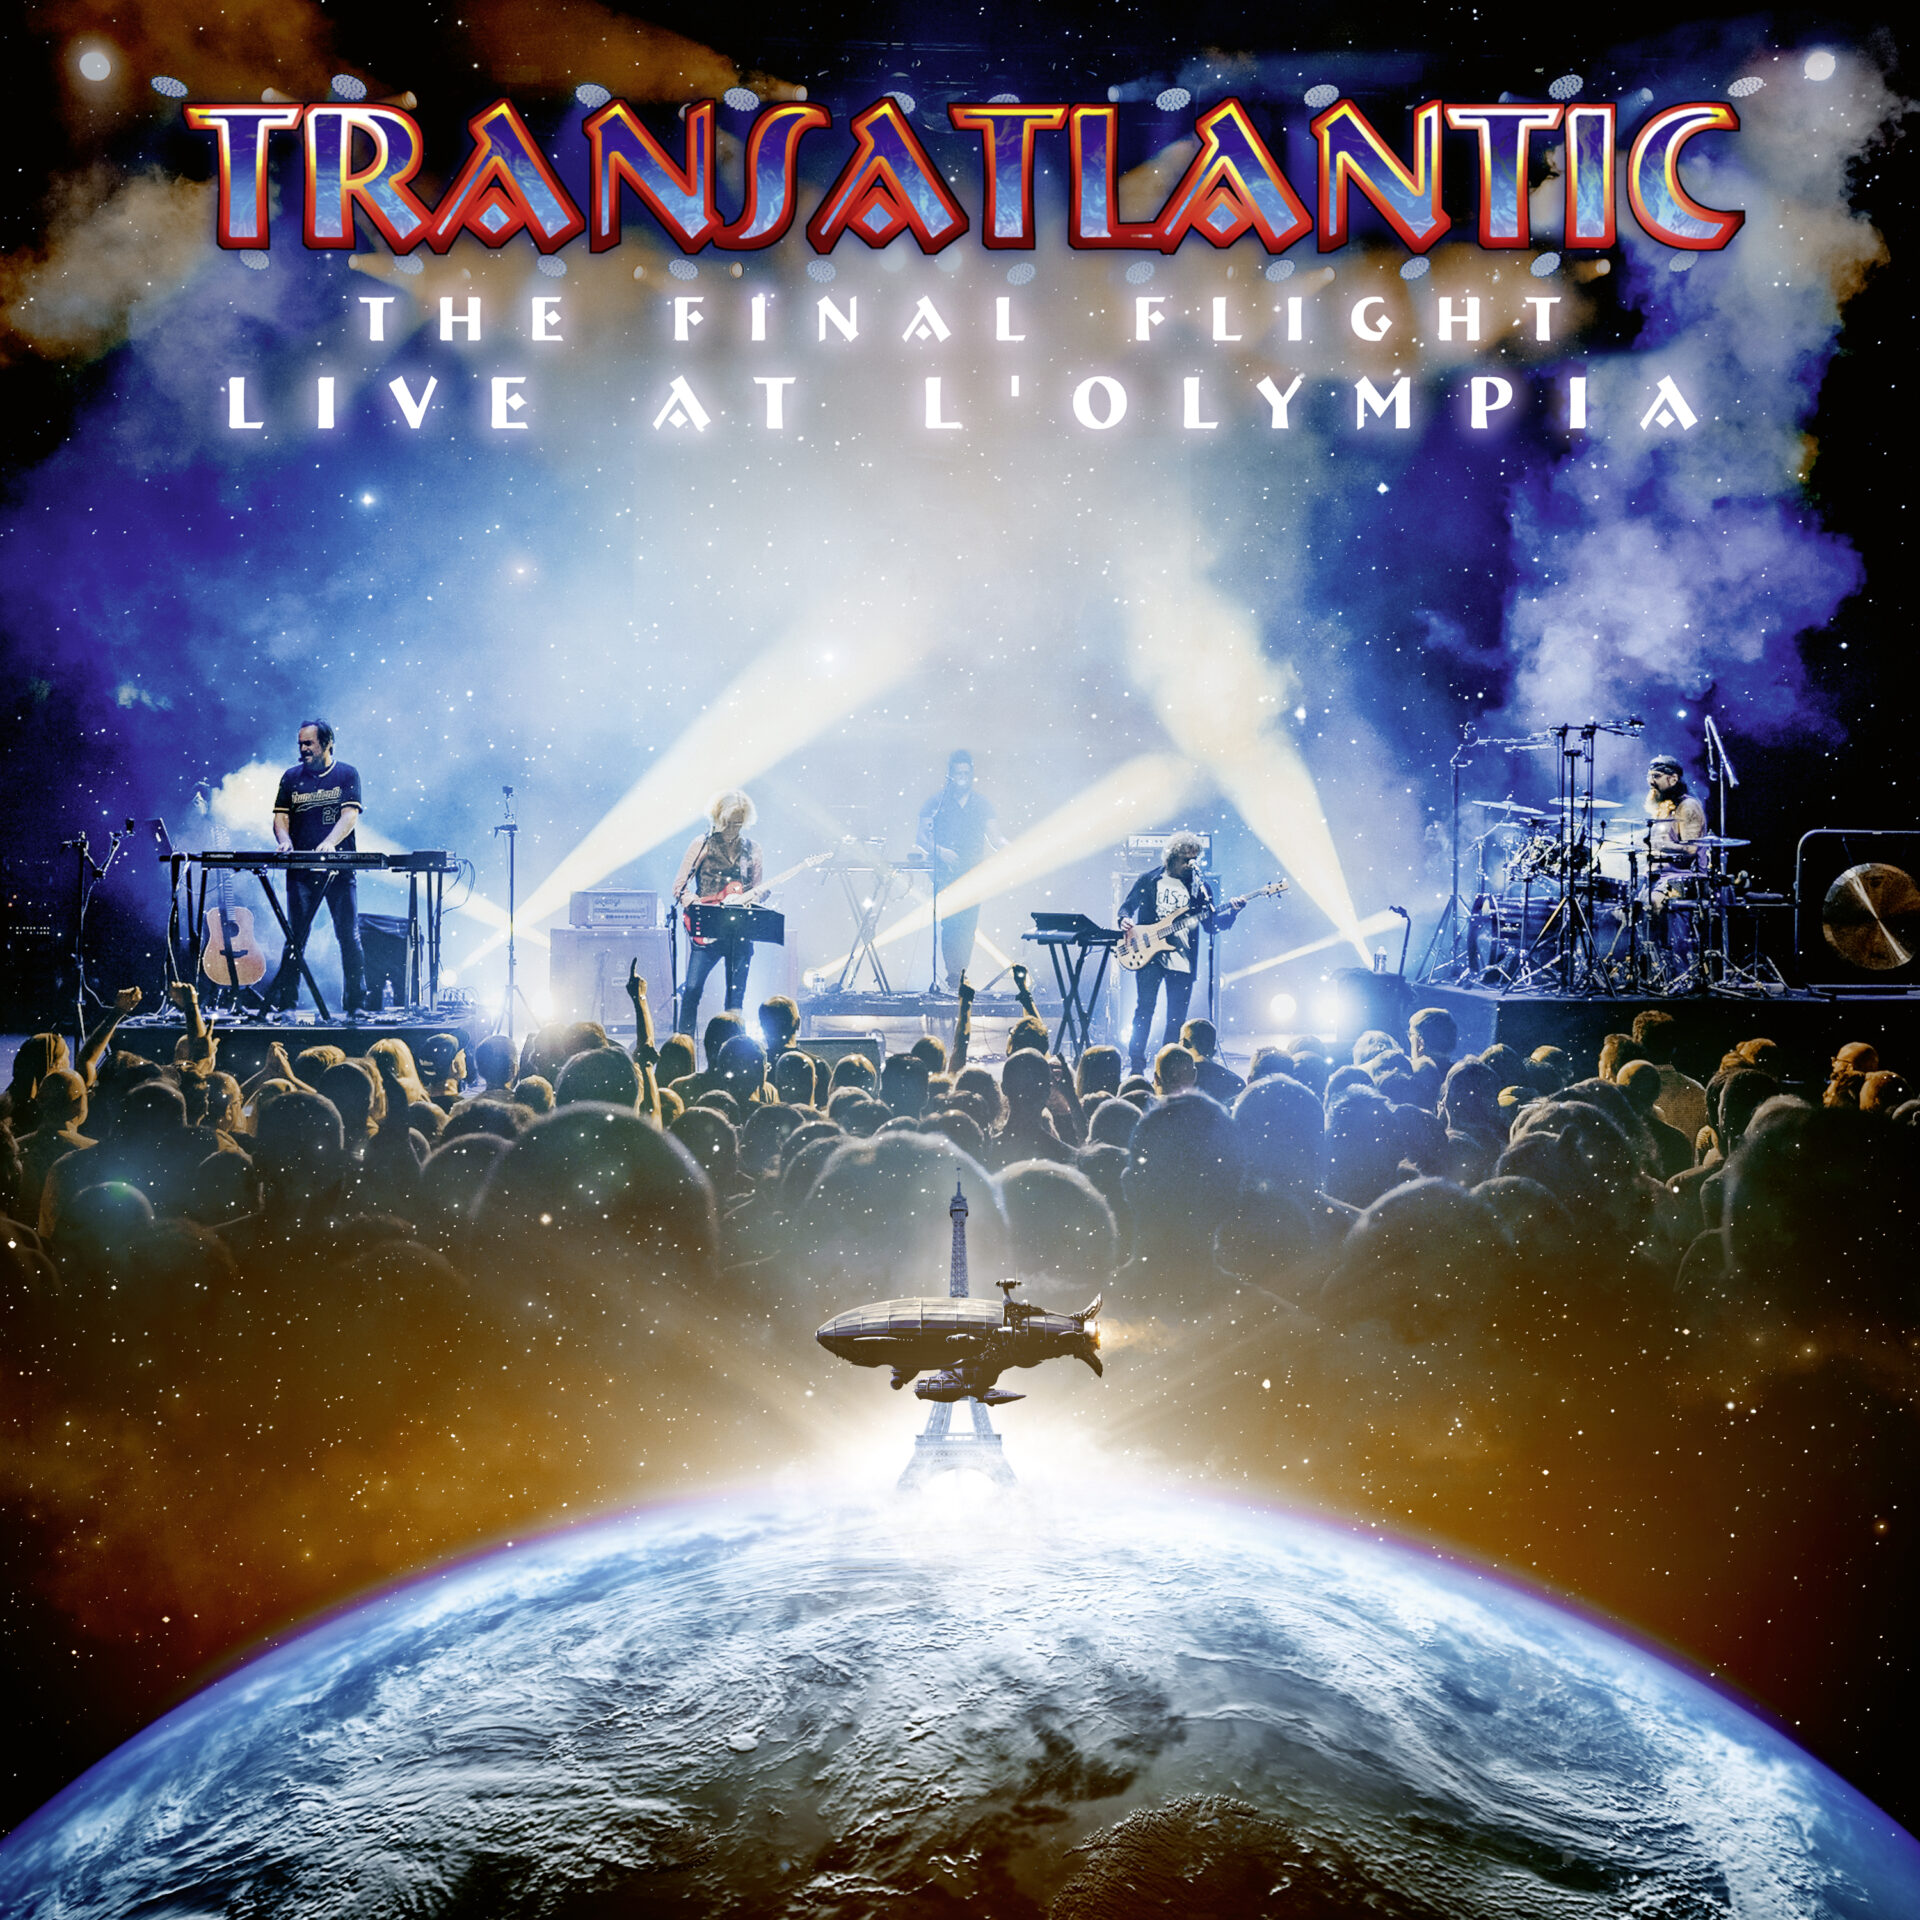 Transatlantic – The Final Flight: Live at L’Olympia